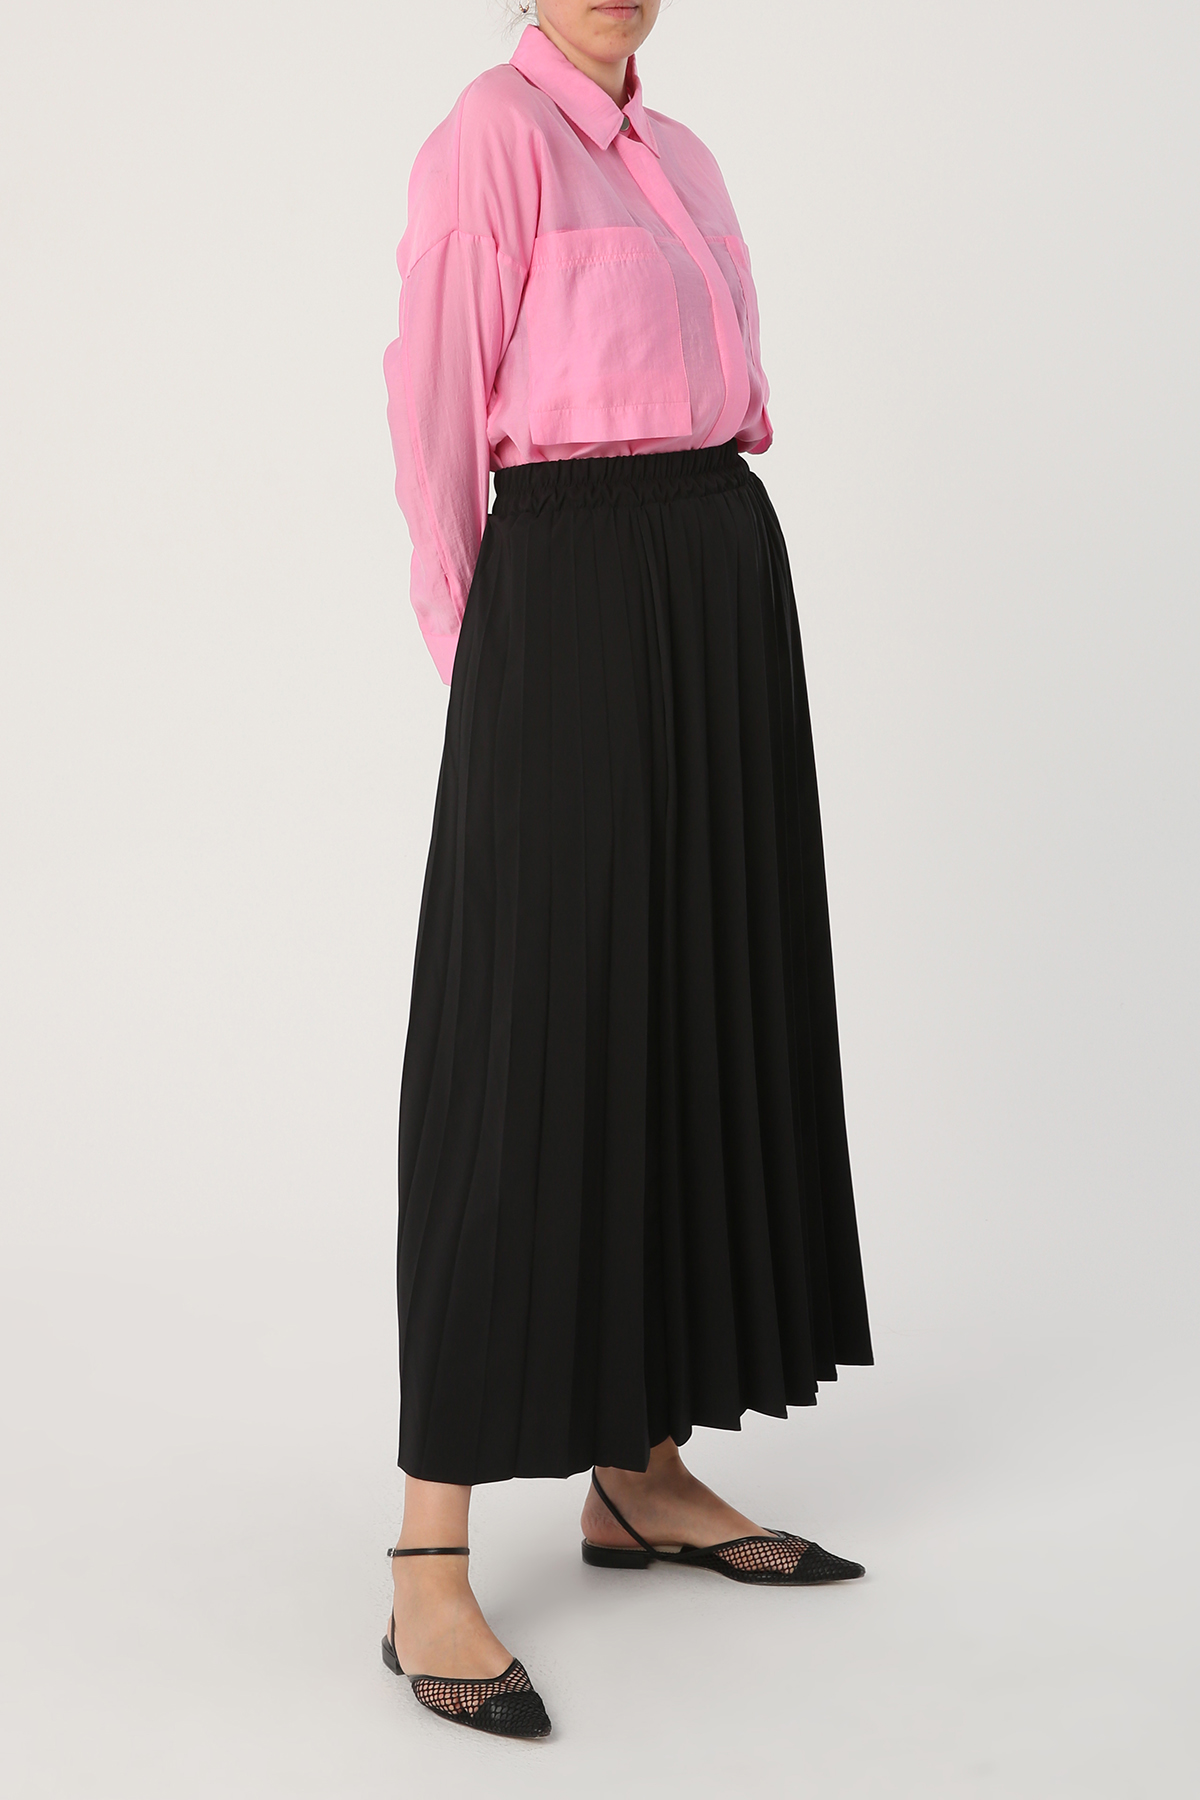 Pattern Pleated Skirt